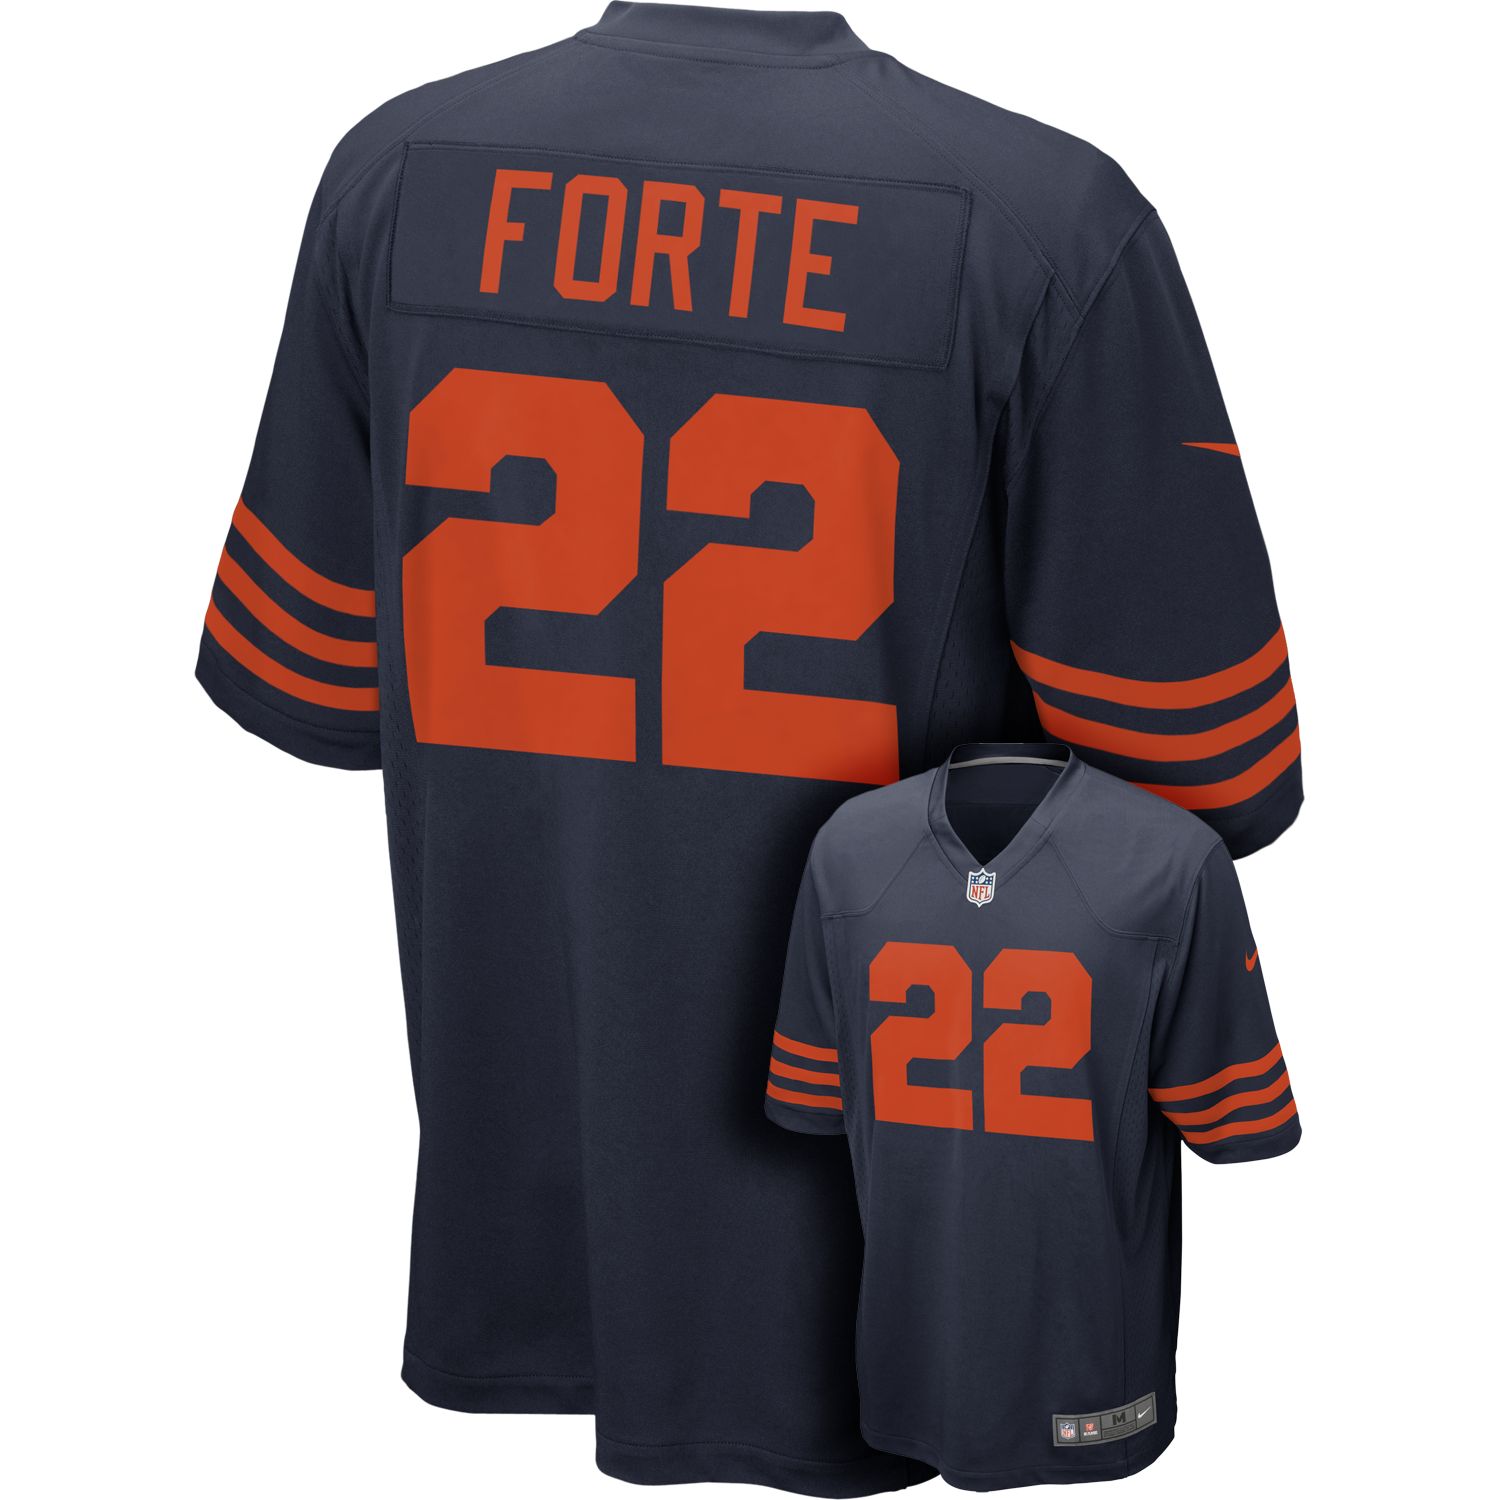 Matt Forte Game NFL Replica Jersey 